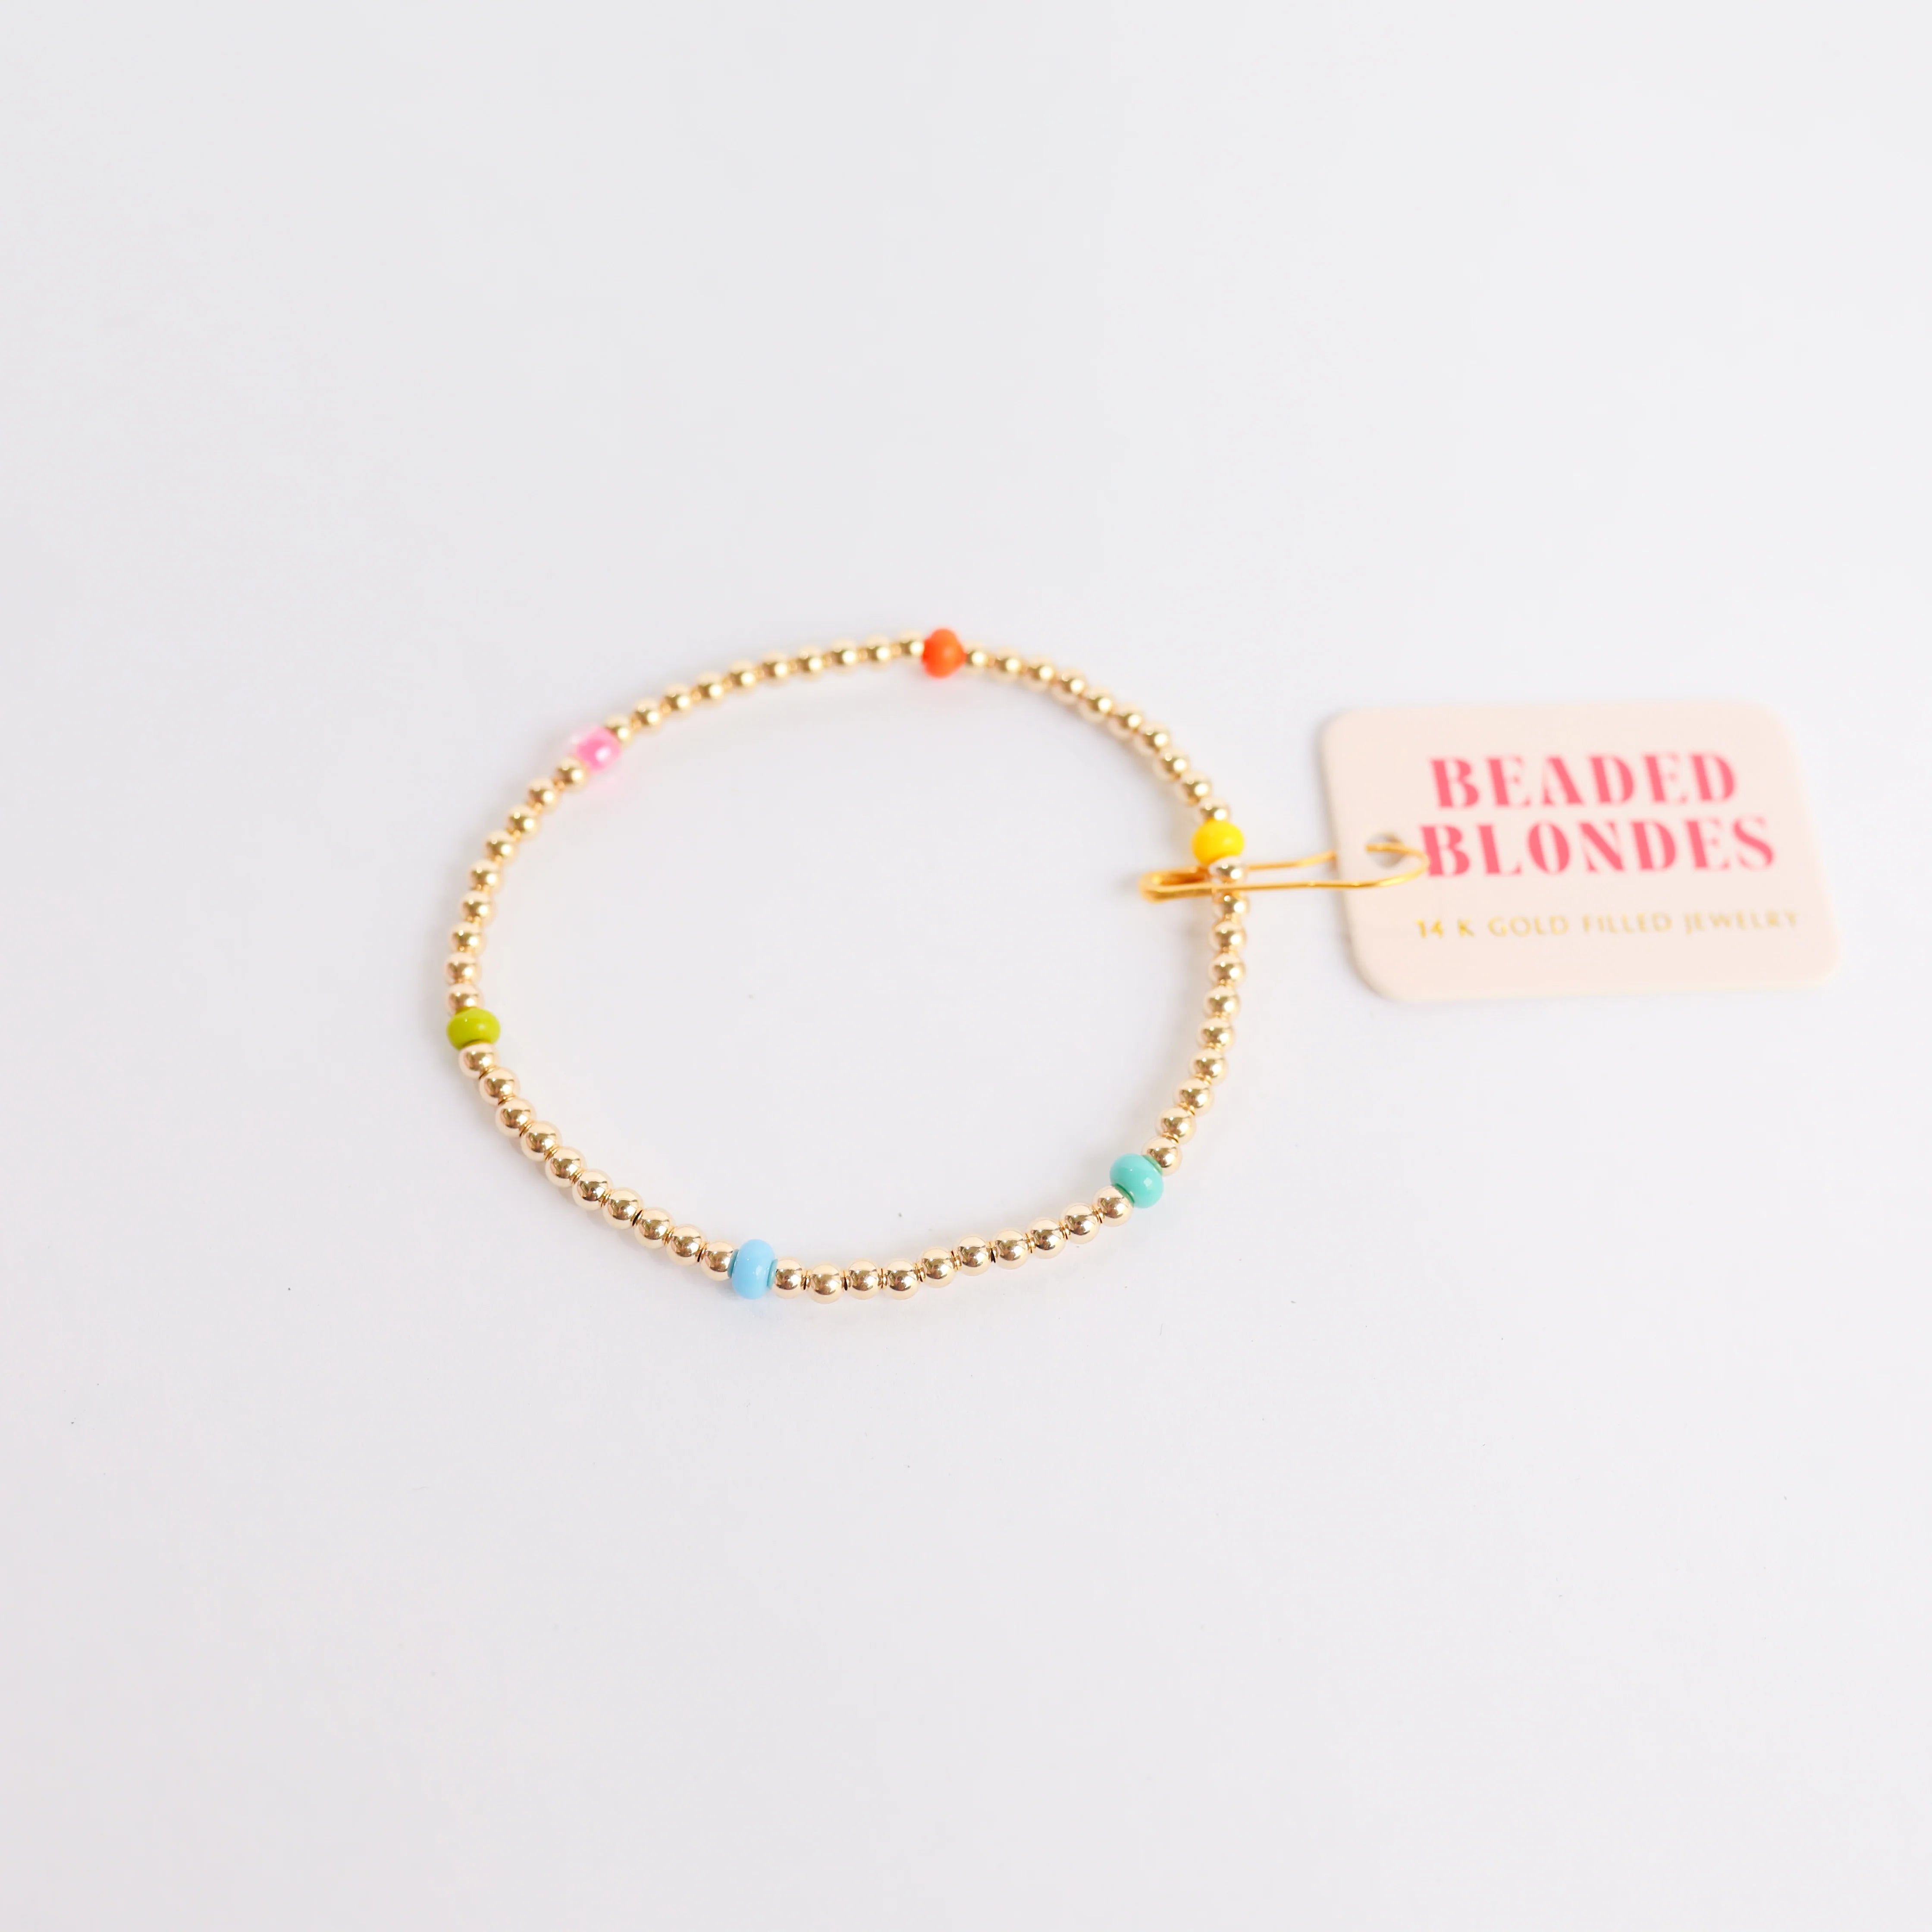 Beaded Blondes | Confetti Poppi Bracelet - Giddy Up Glamour Boutique